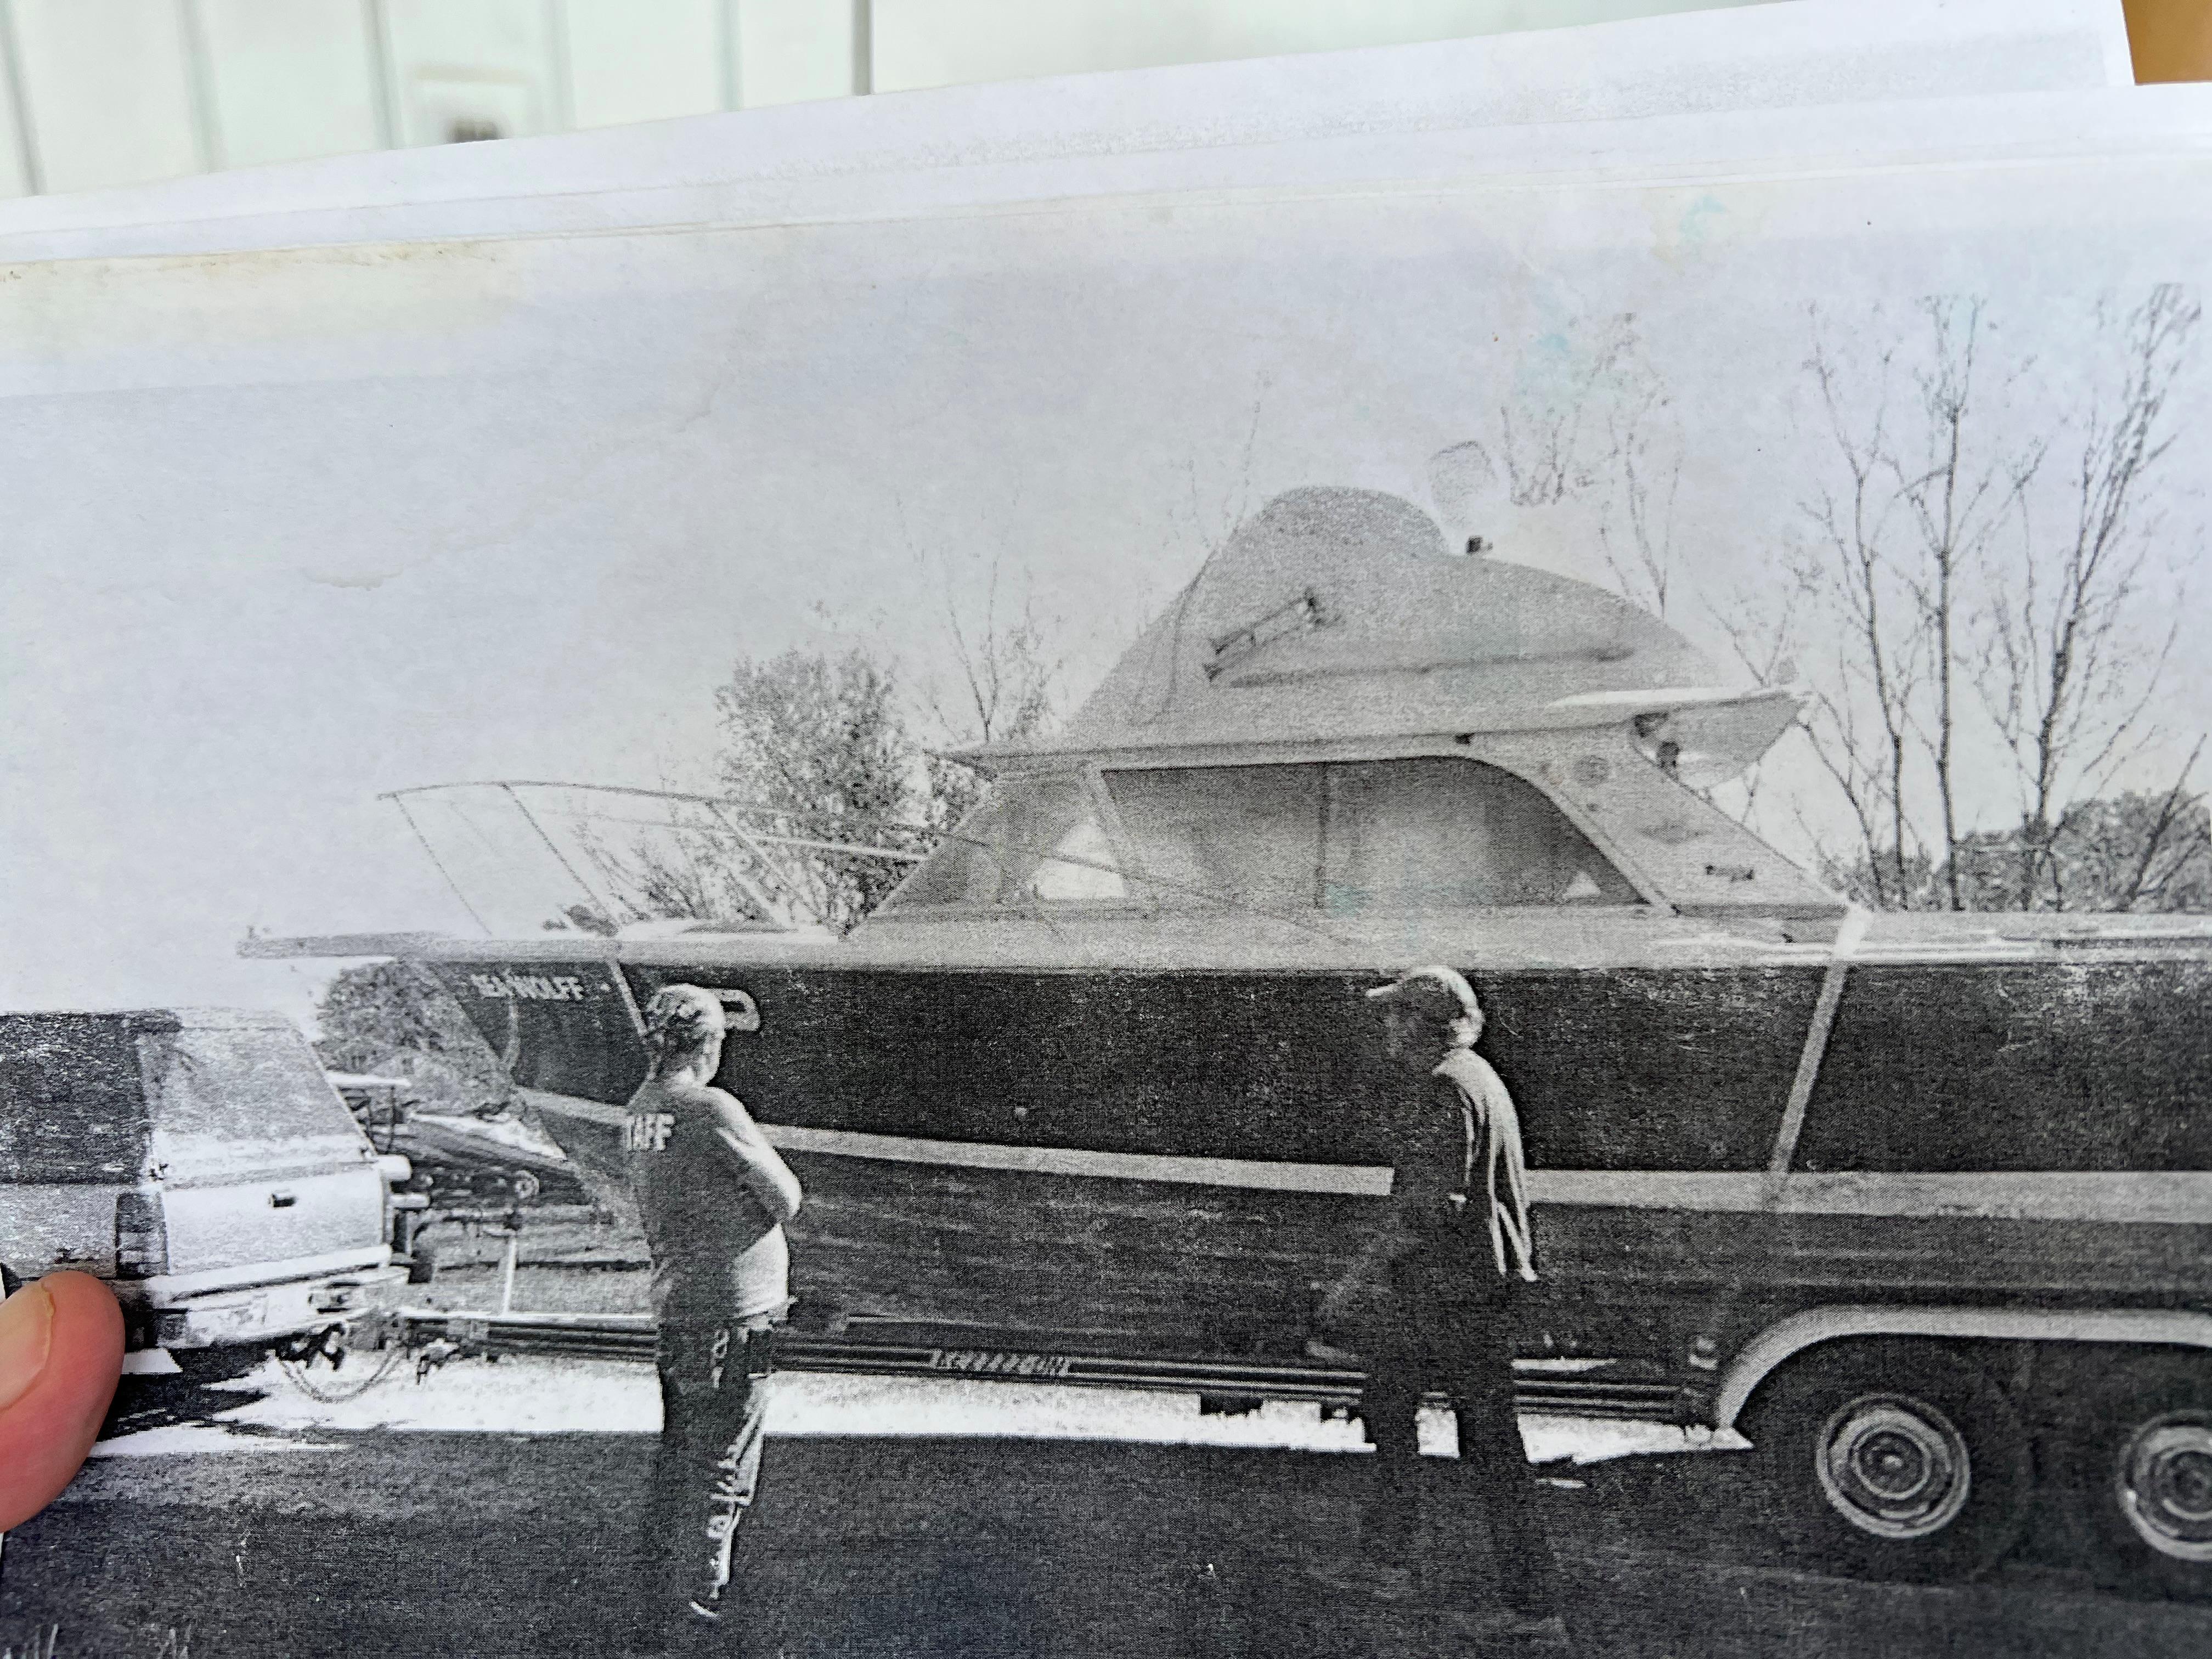 1965 Bertram Sport Fish Cruiser - Custom For Sale | YaZu Yachting | Deltaville